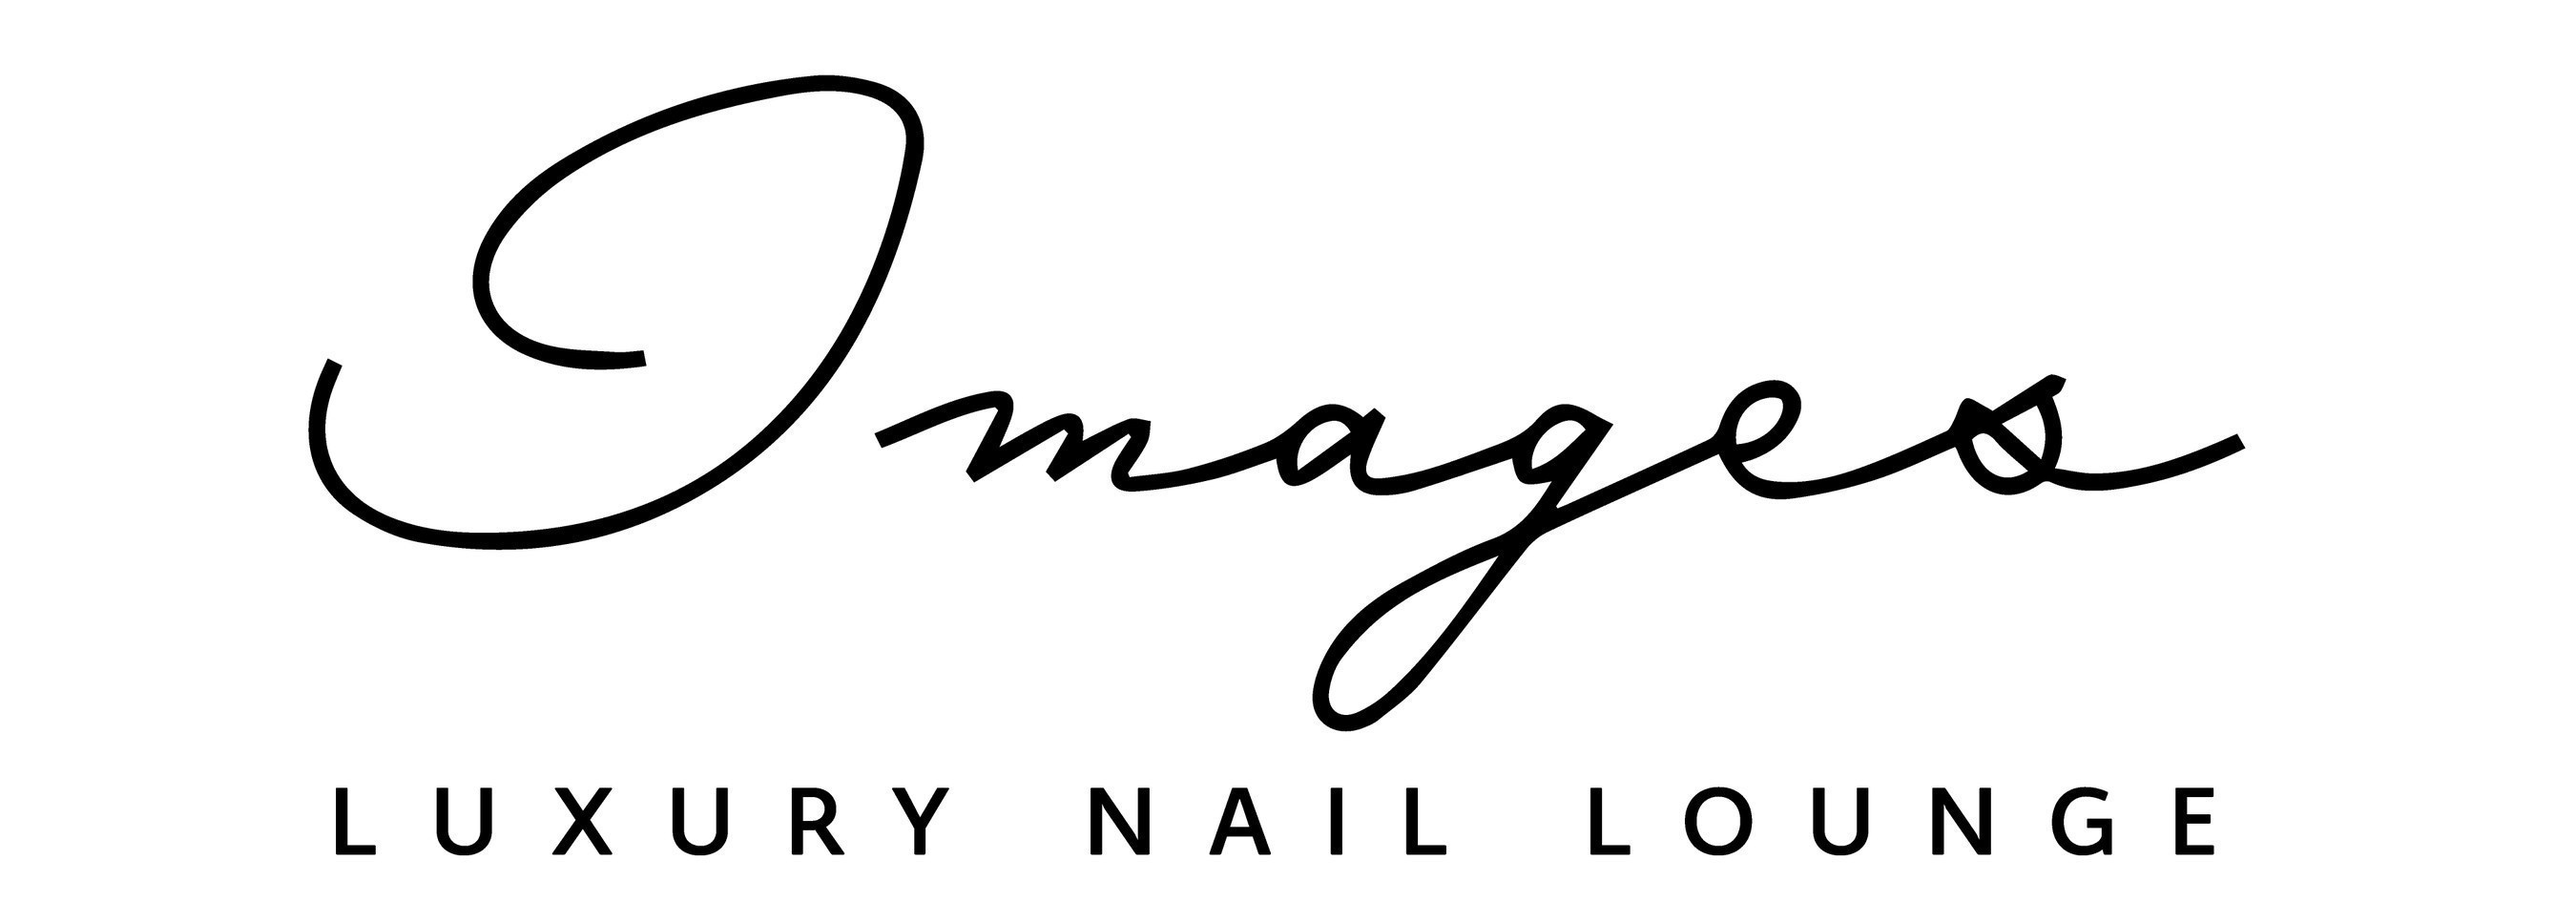 Images Luxury Nail Lounge